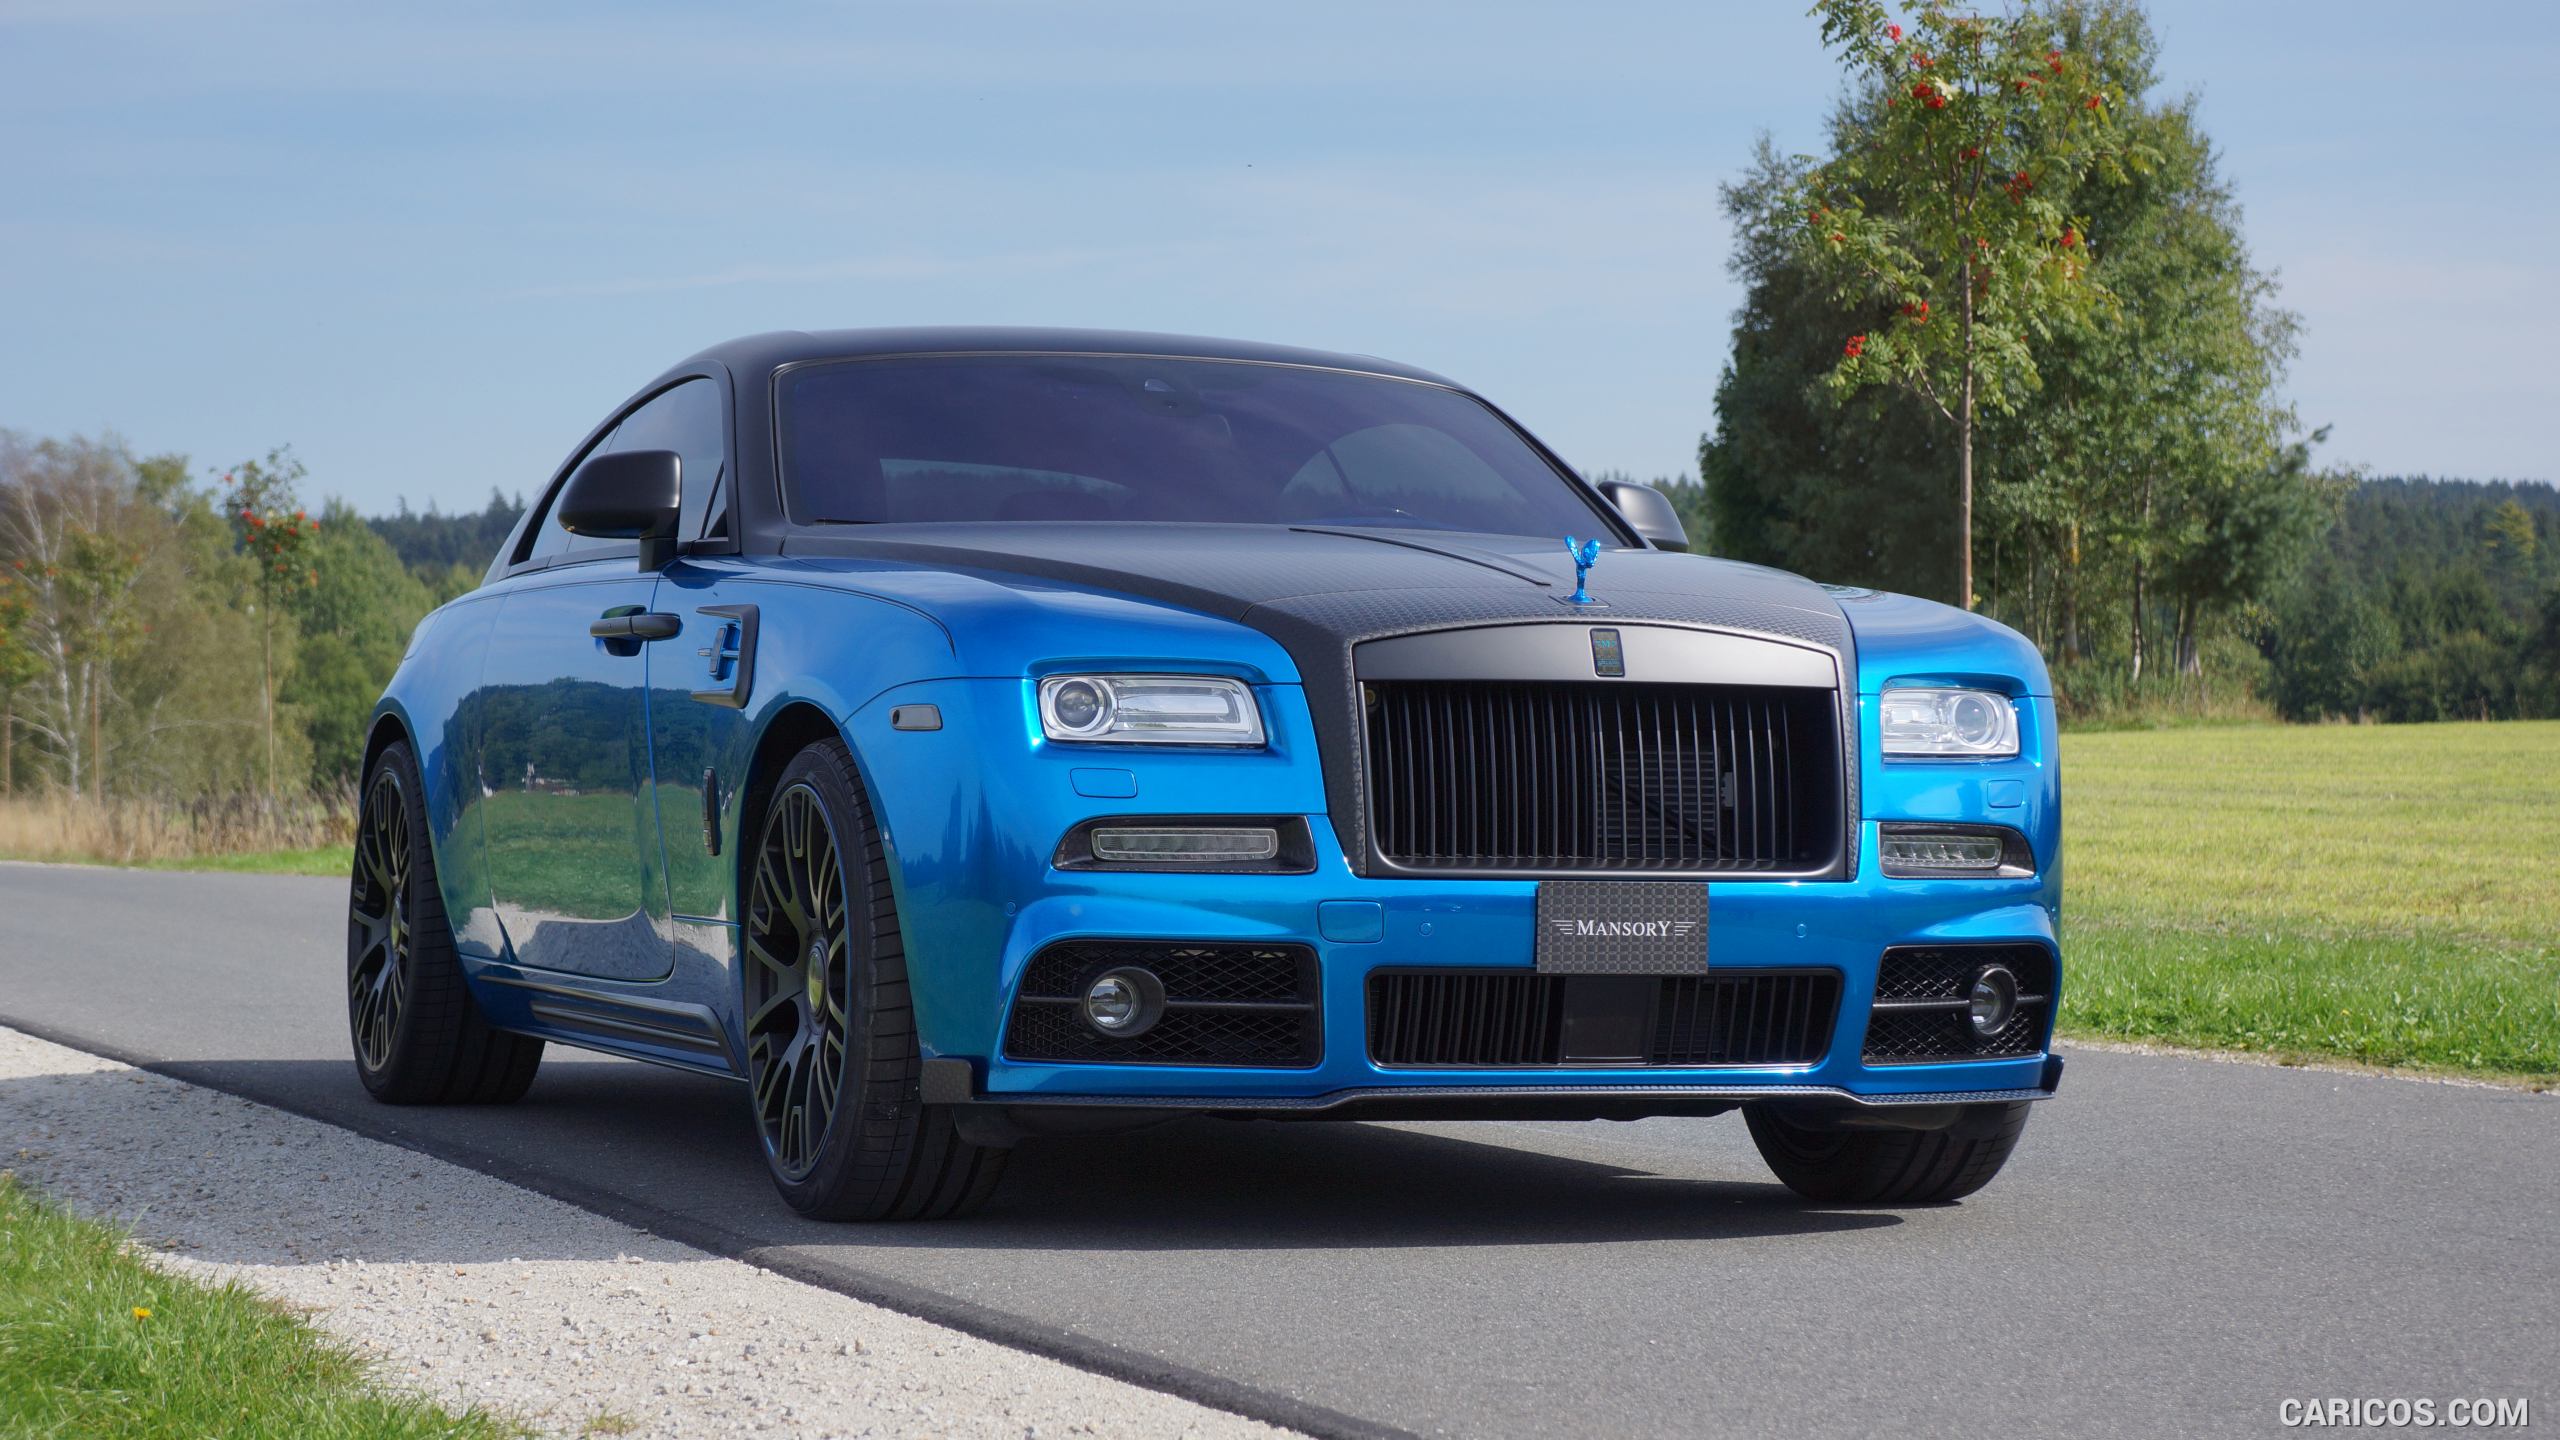 2015 MANSORY BLEURION based on Rolls-Royce Wraith - Front, #5 of 12